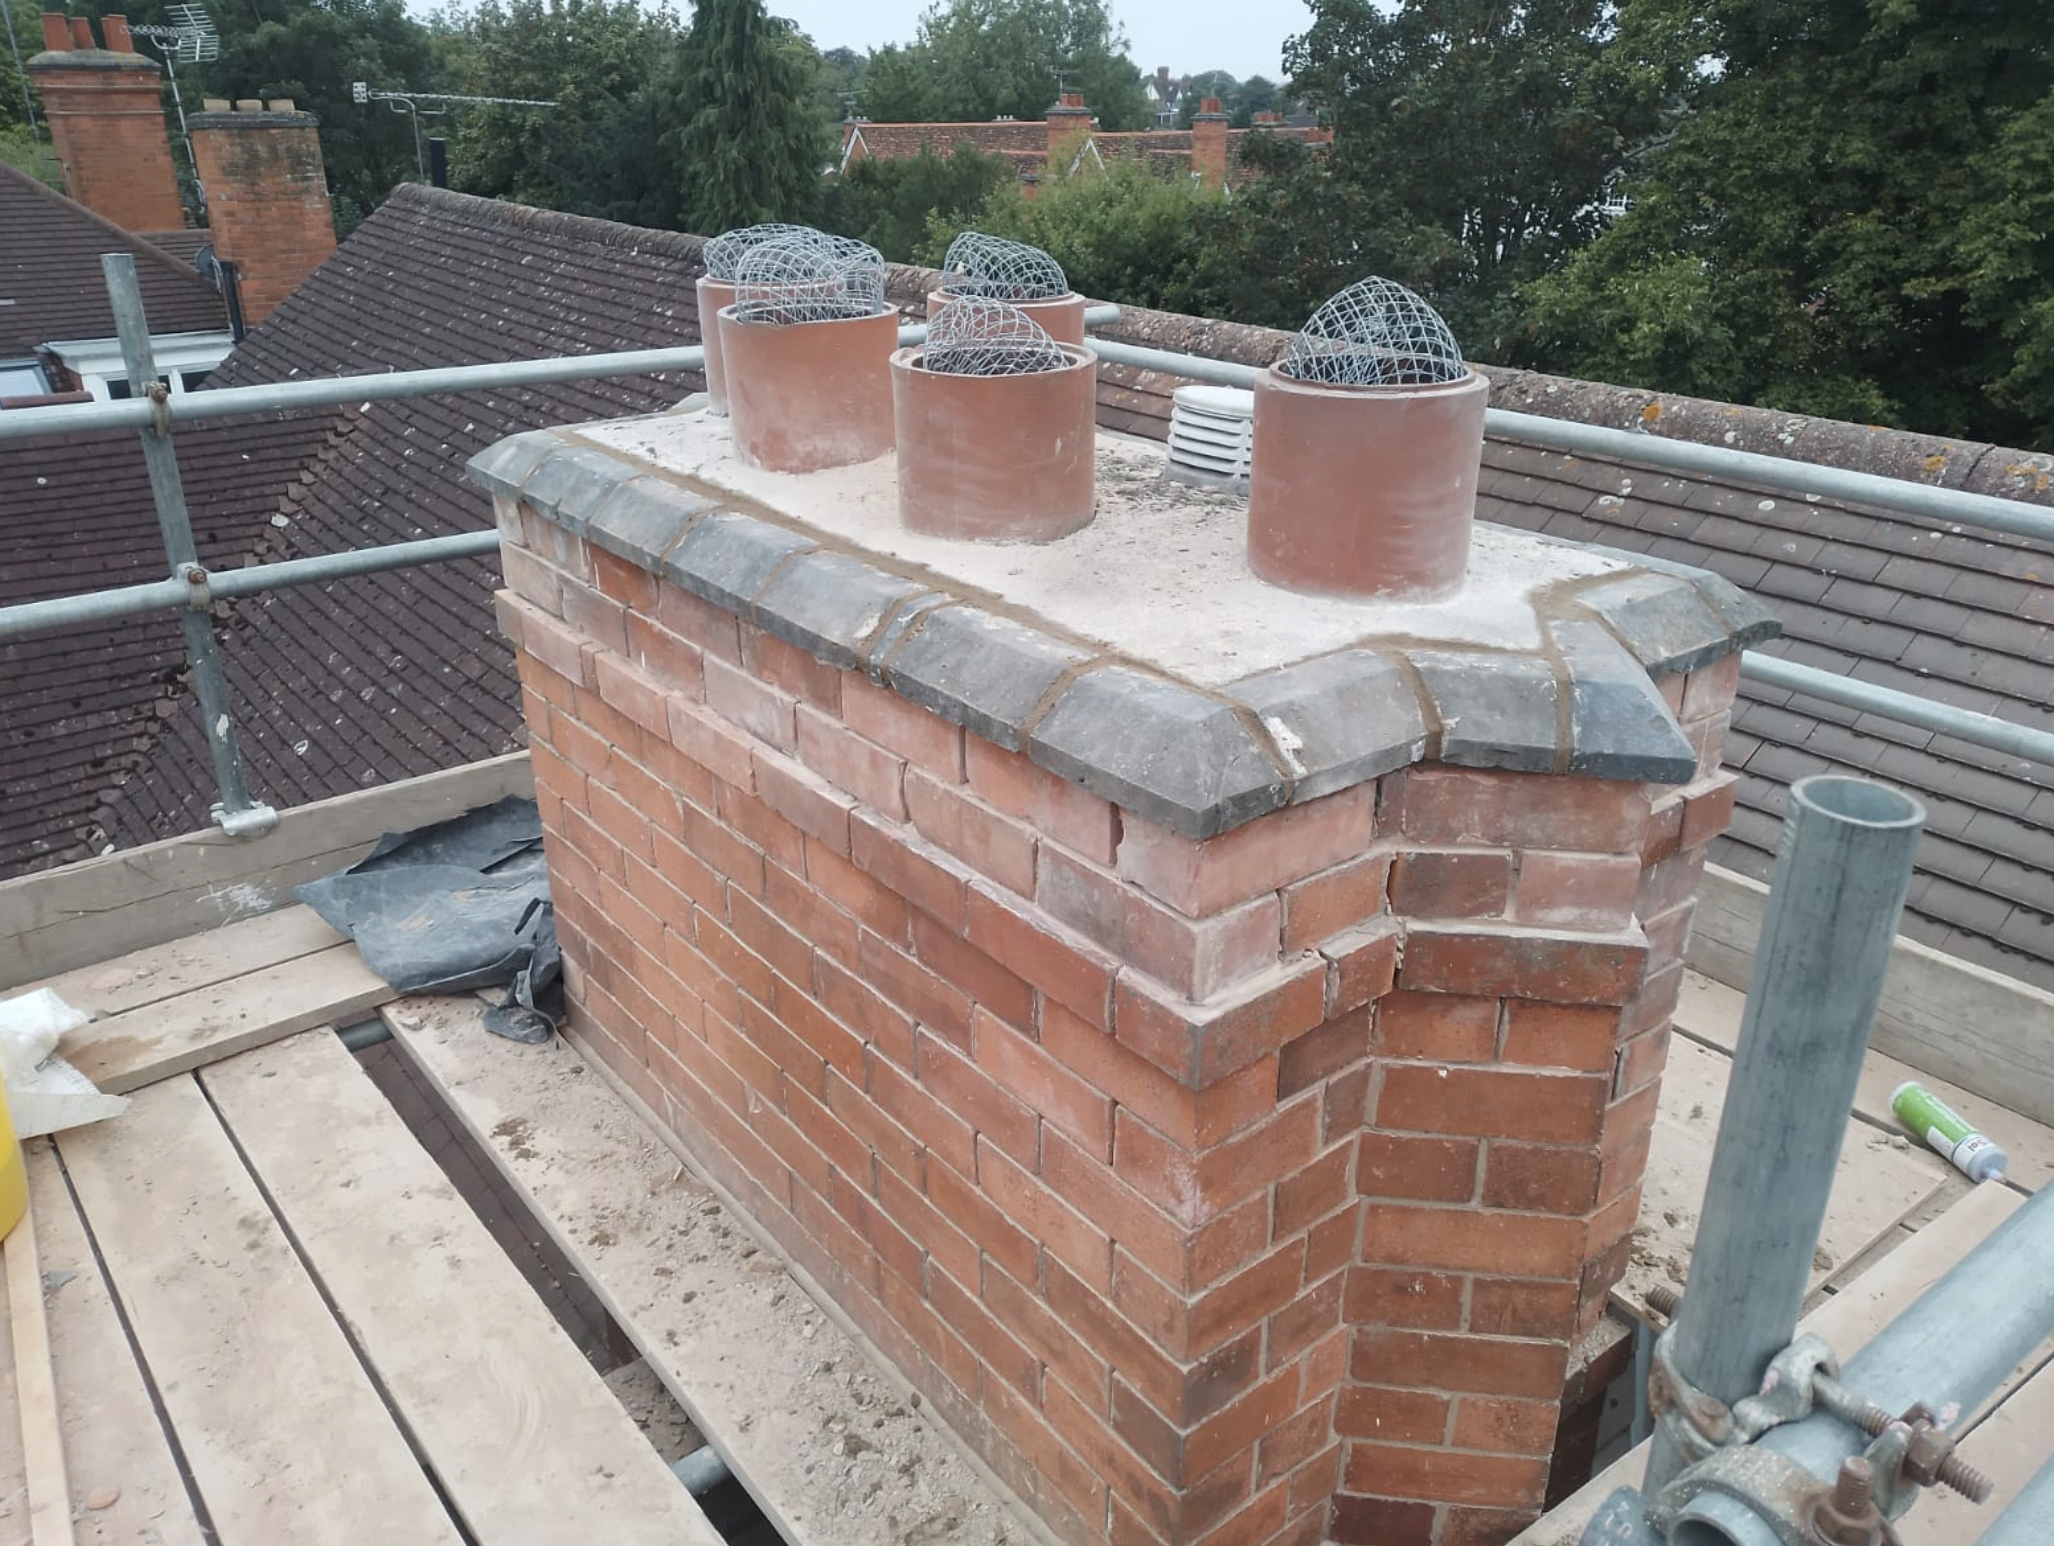 Edwardian Chimney Stabilisation and Rebuild With Lime Mortar